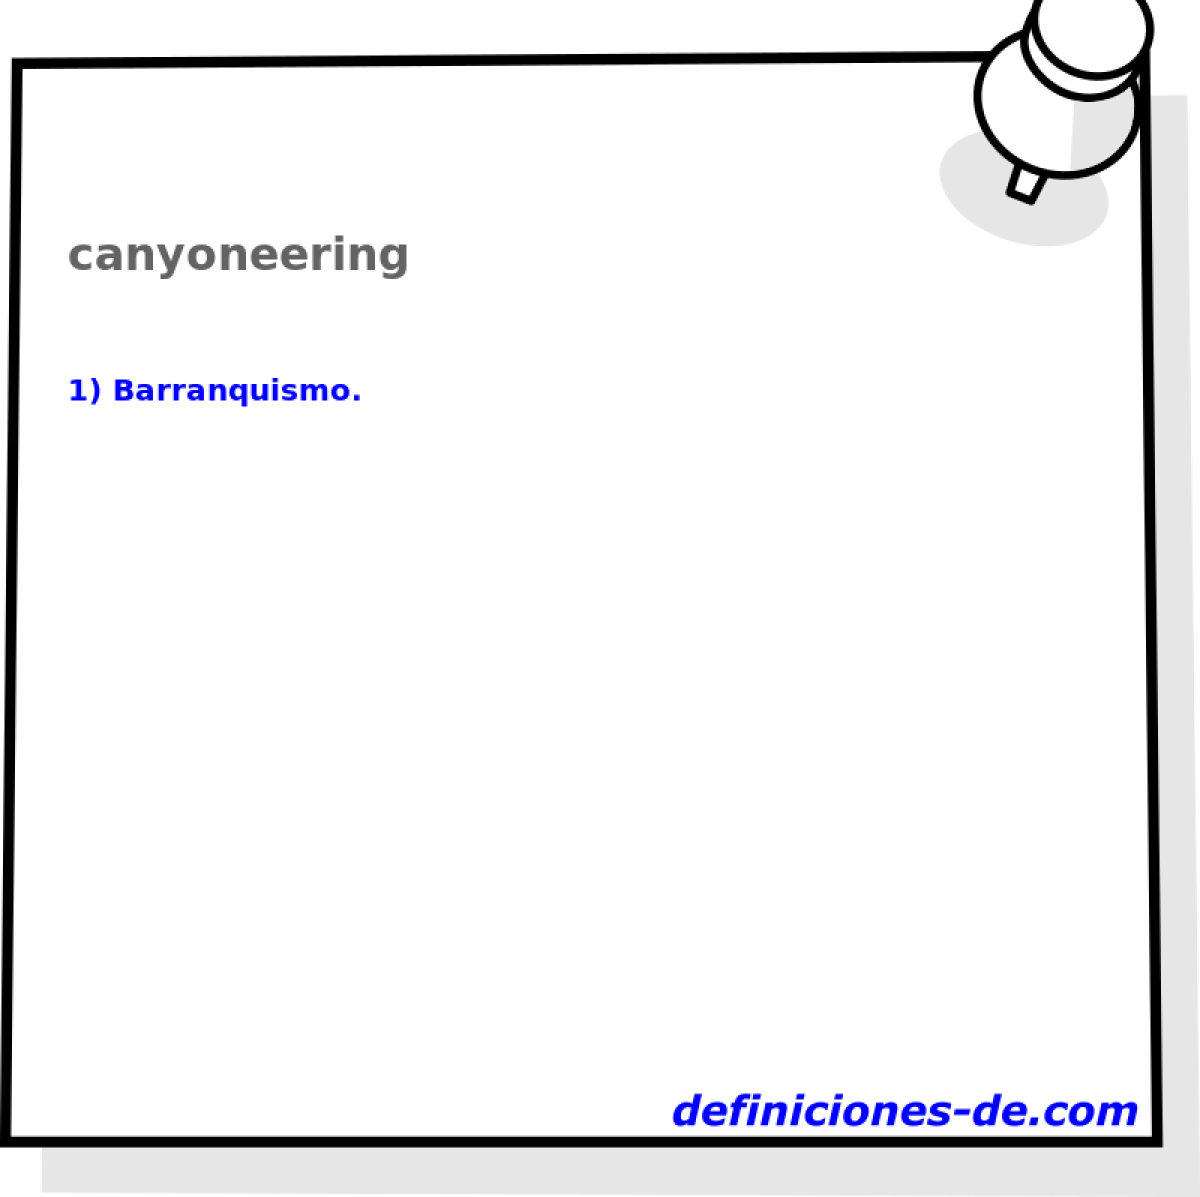 canyoneering 